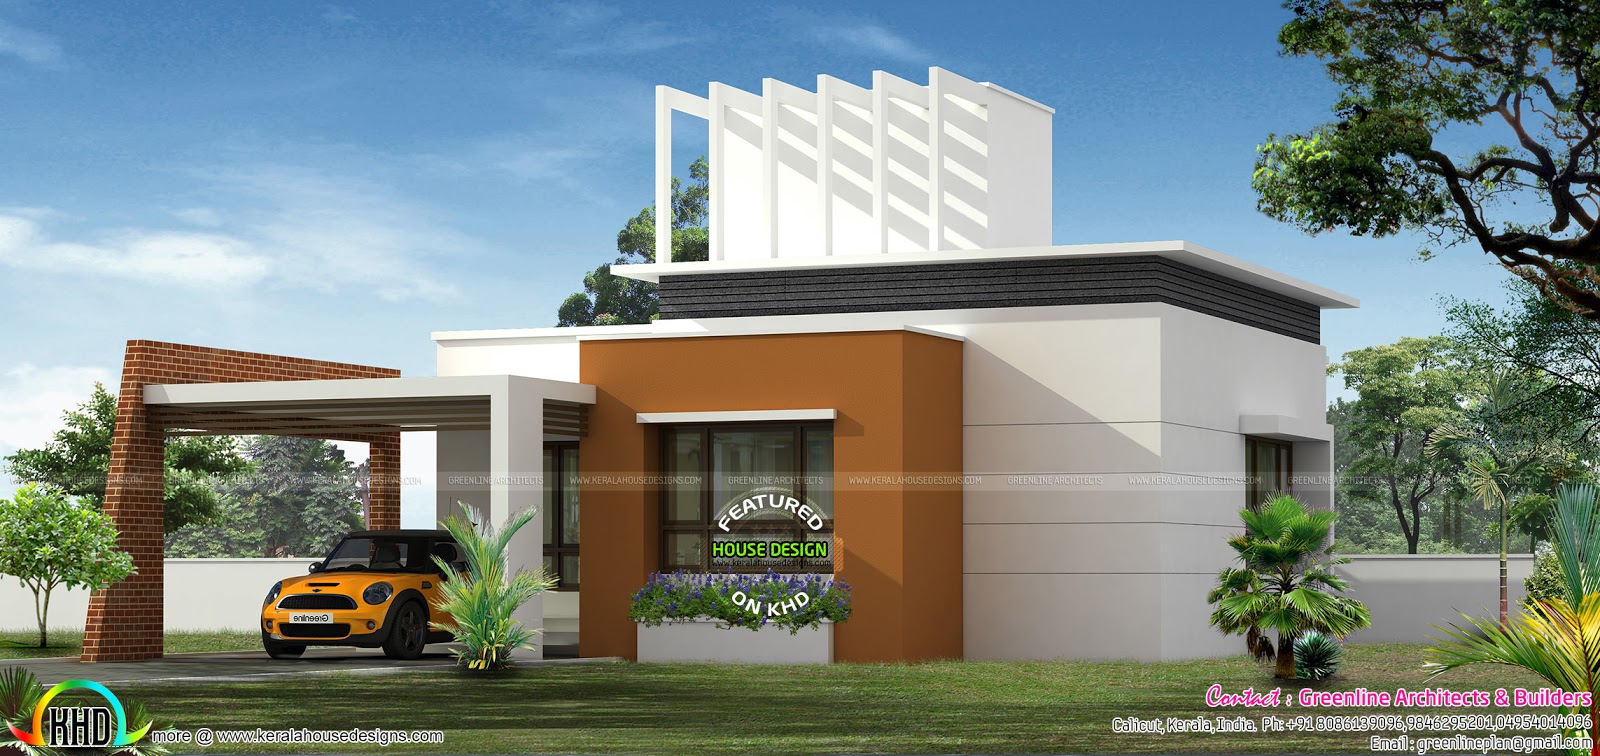 20 Lakhs Estimate home design Kerala home design 